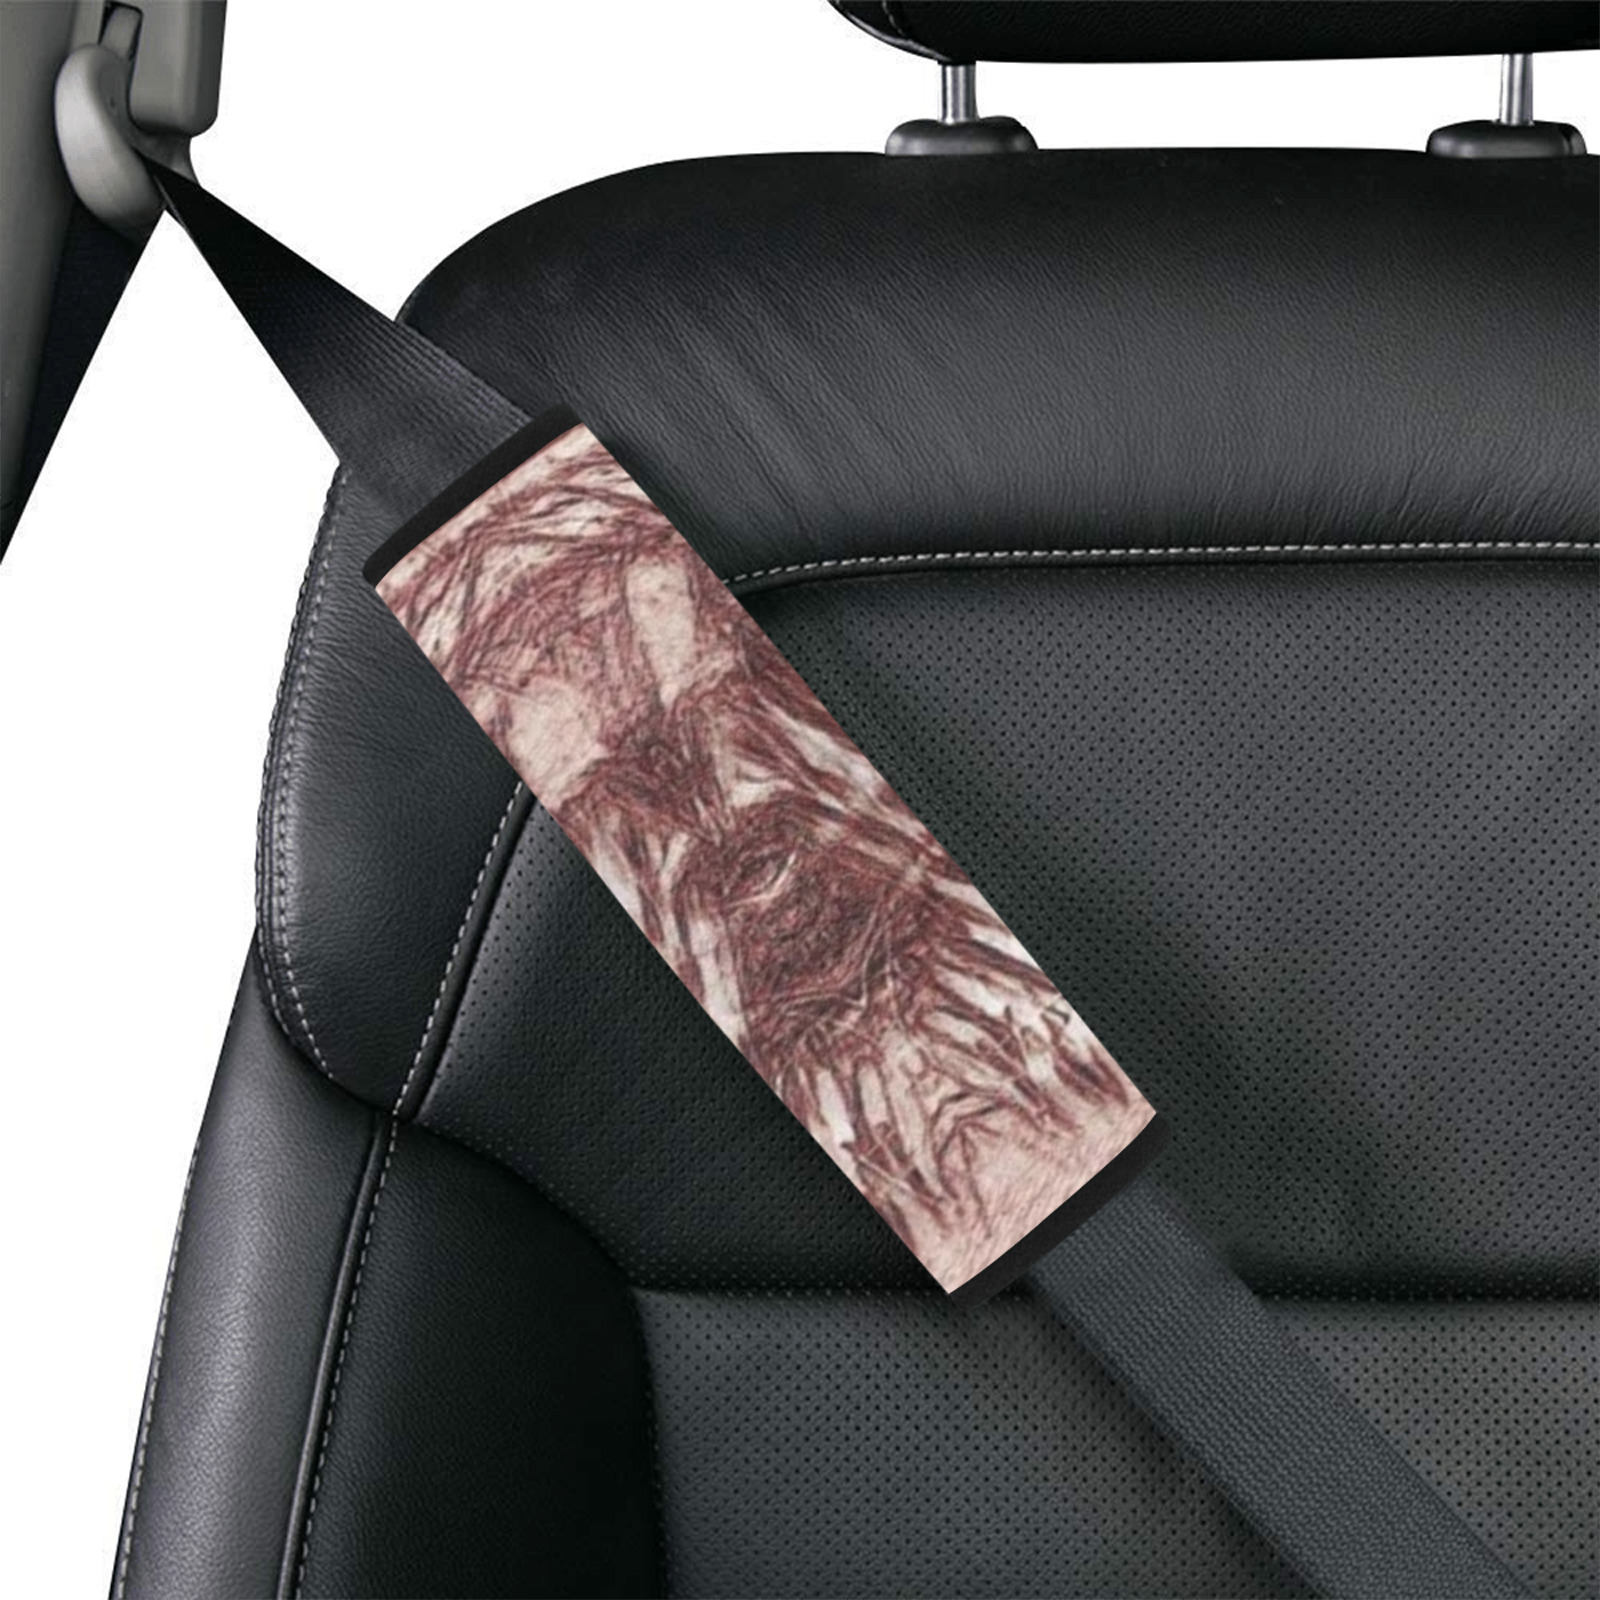 cardsasdssdsad Car Seat Belt Cover 7''x8.5'' (Pack of 2)